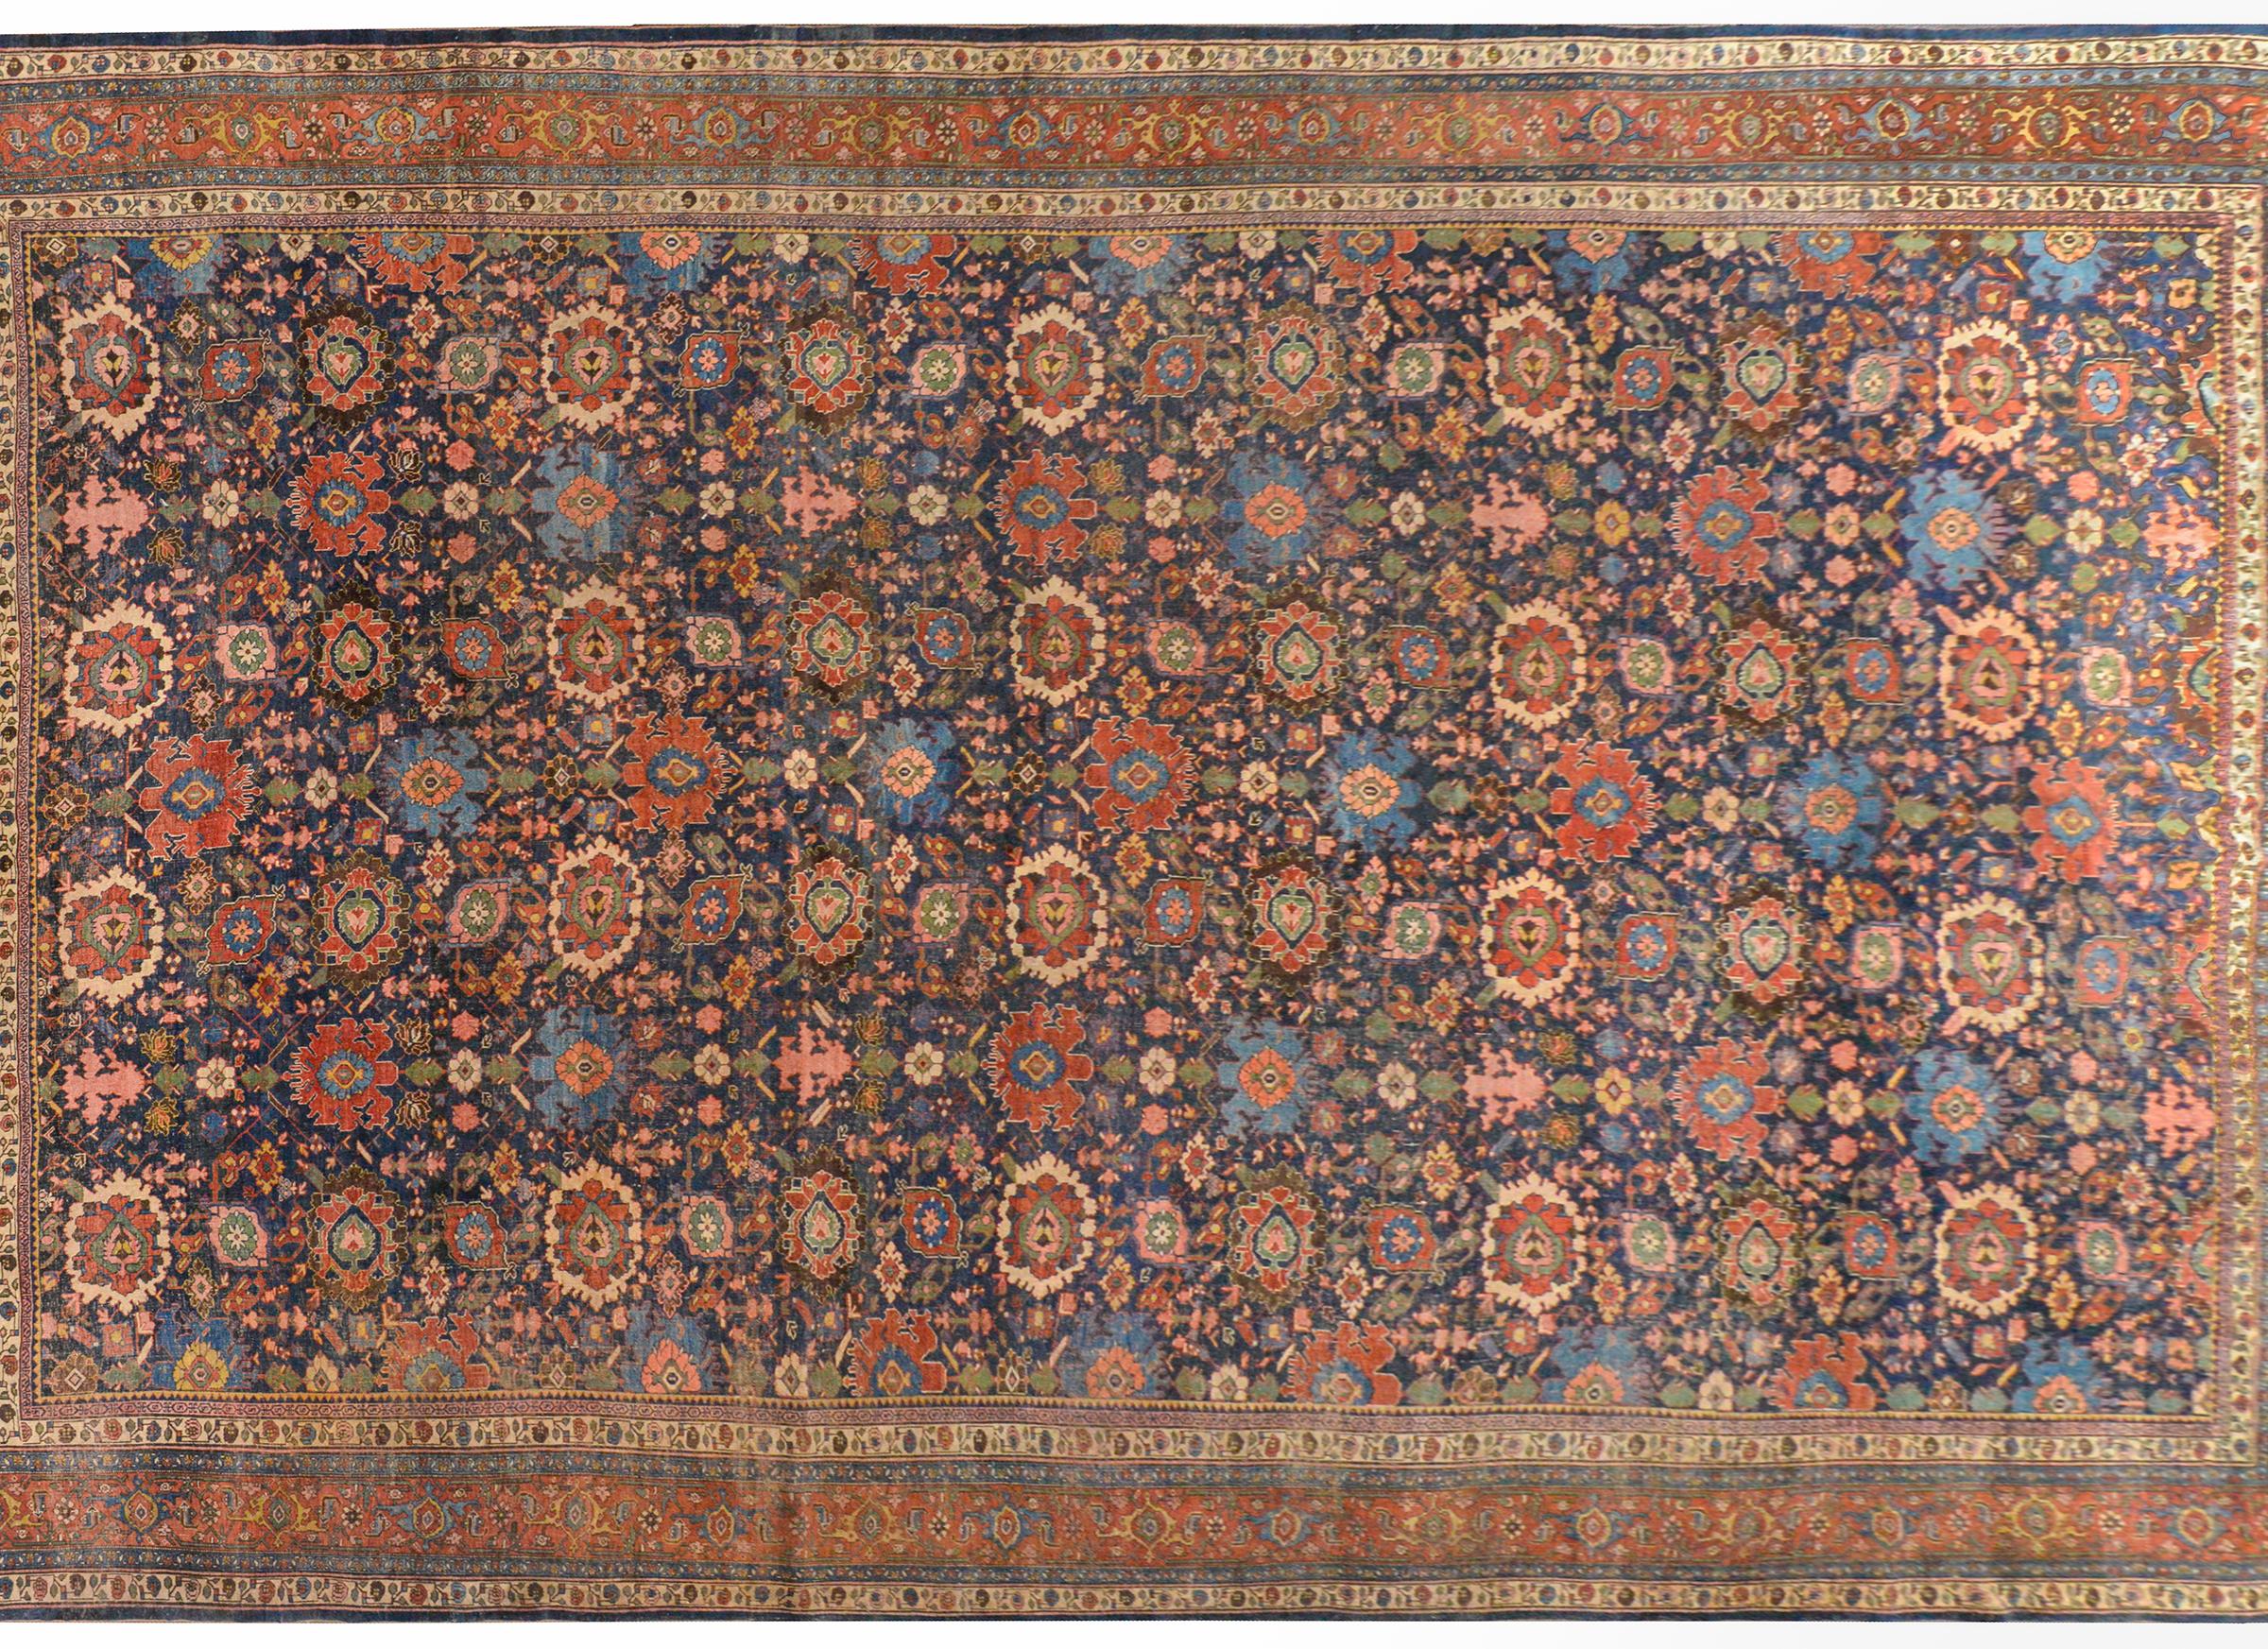 Tribal Incroyable tapis palatial Bidjar de la fin du 19e siècle en vente